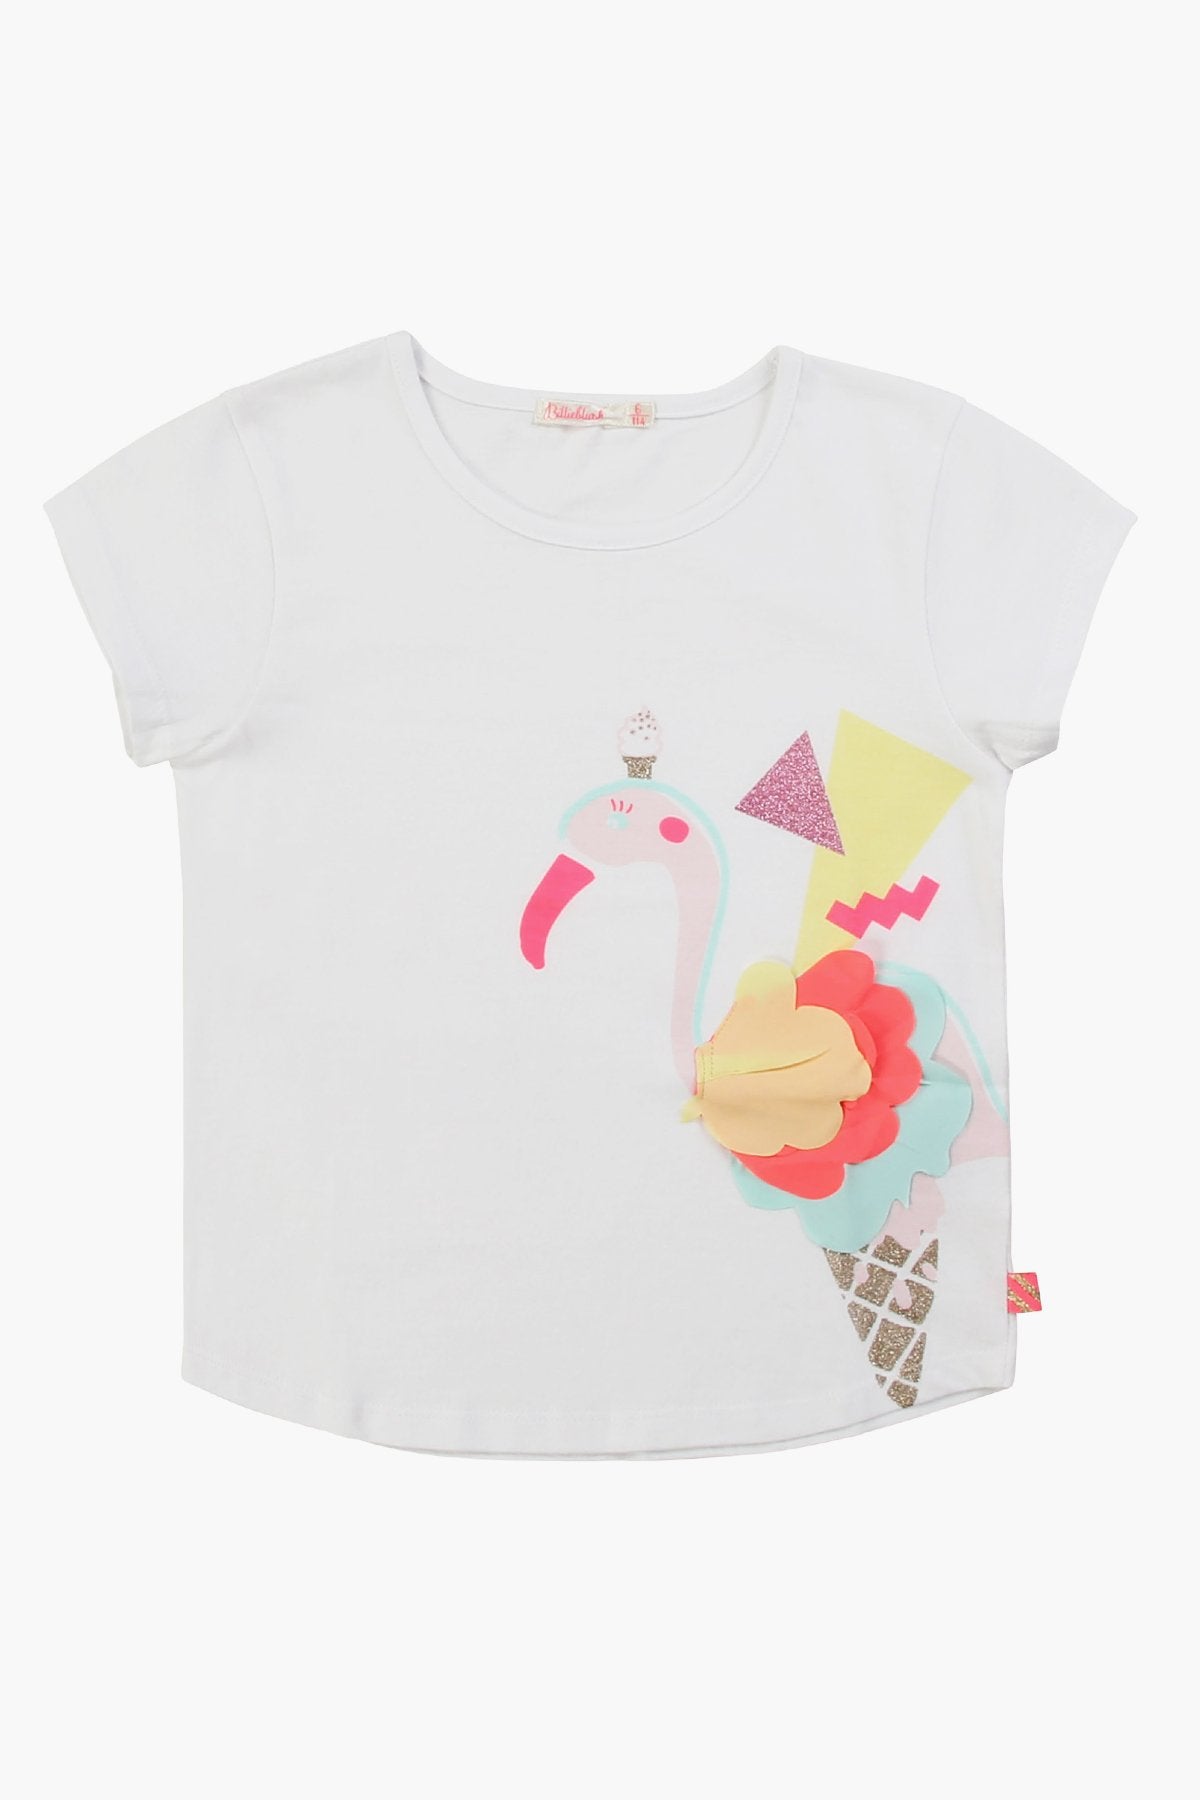 Billieblush Flamingo Cone Girls Shirt (Size 4 left) – Mini Ruby